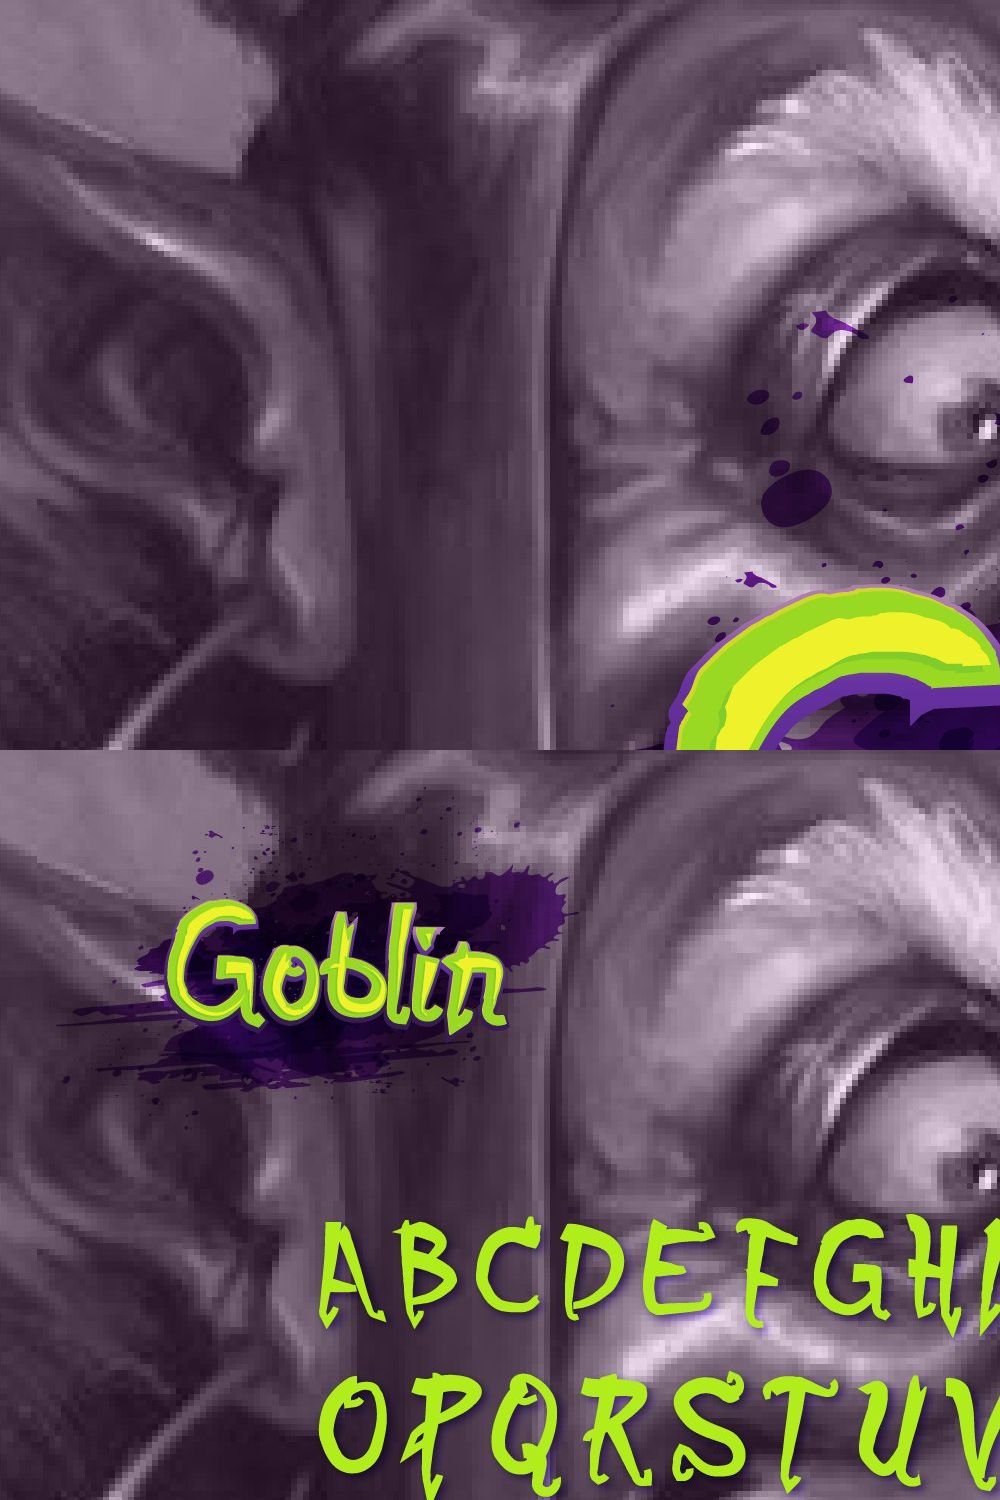 GOBLIN pinterest preview image.